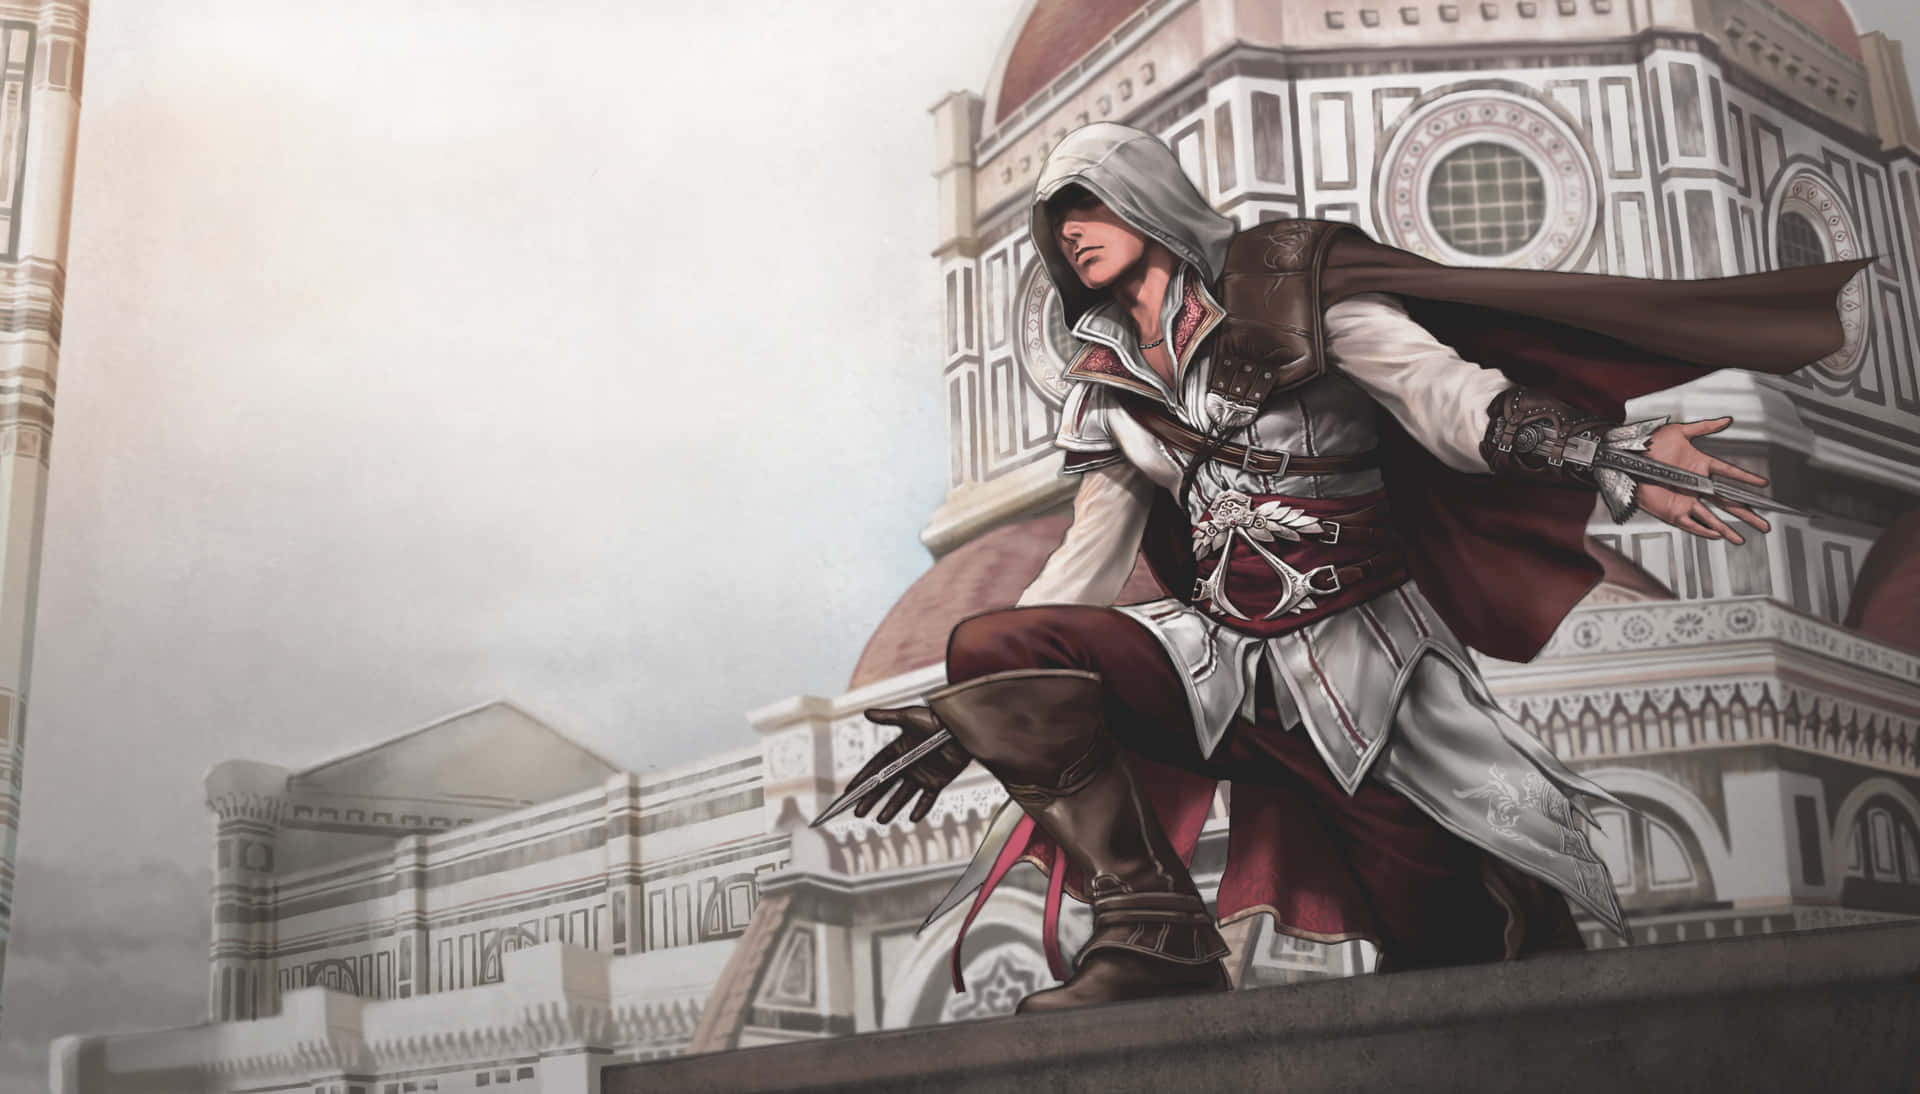 Enigmatic Ezio Auditore posing amidst Italian architecture Wallpaper